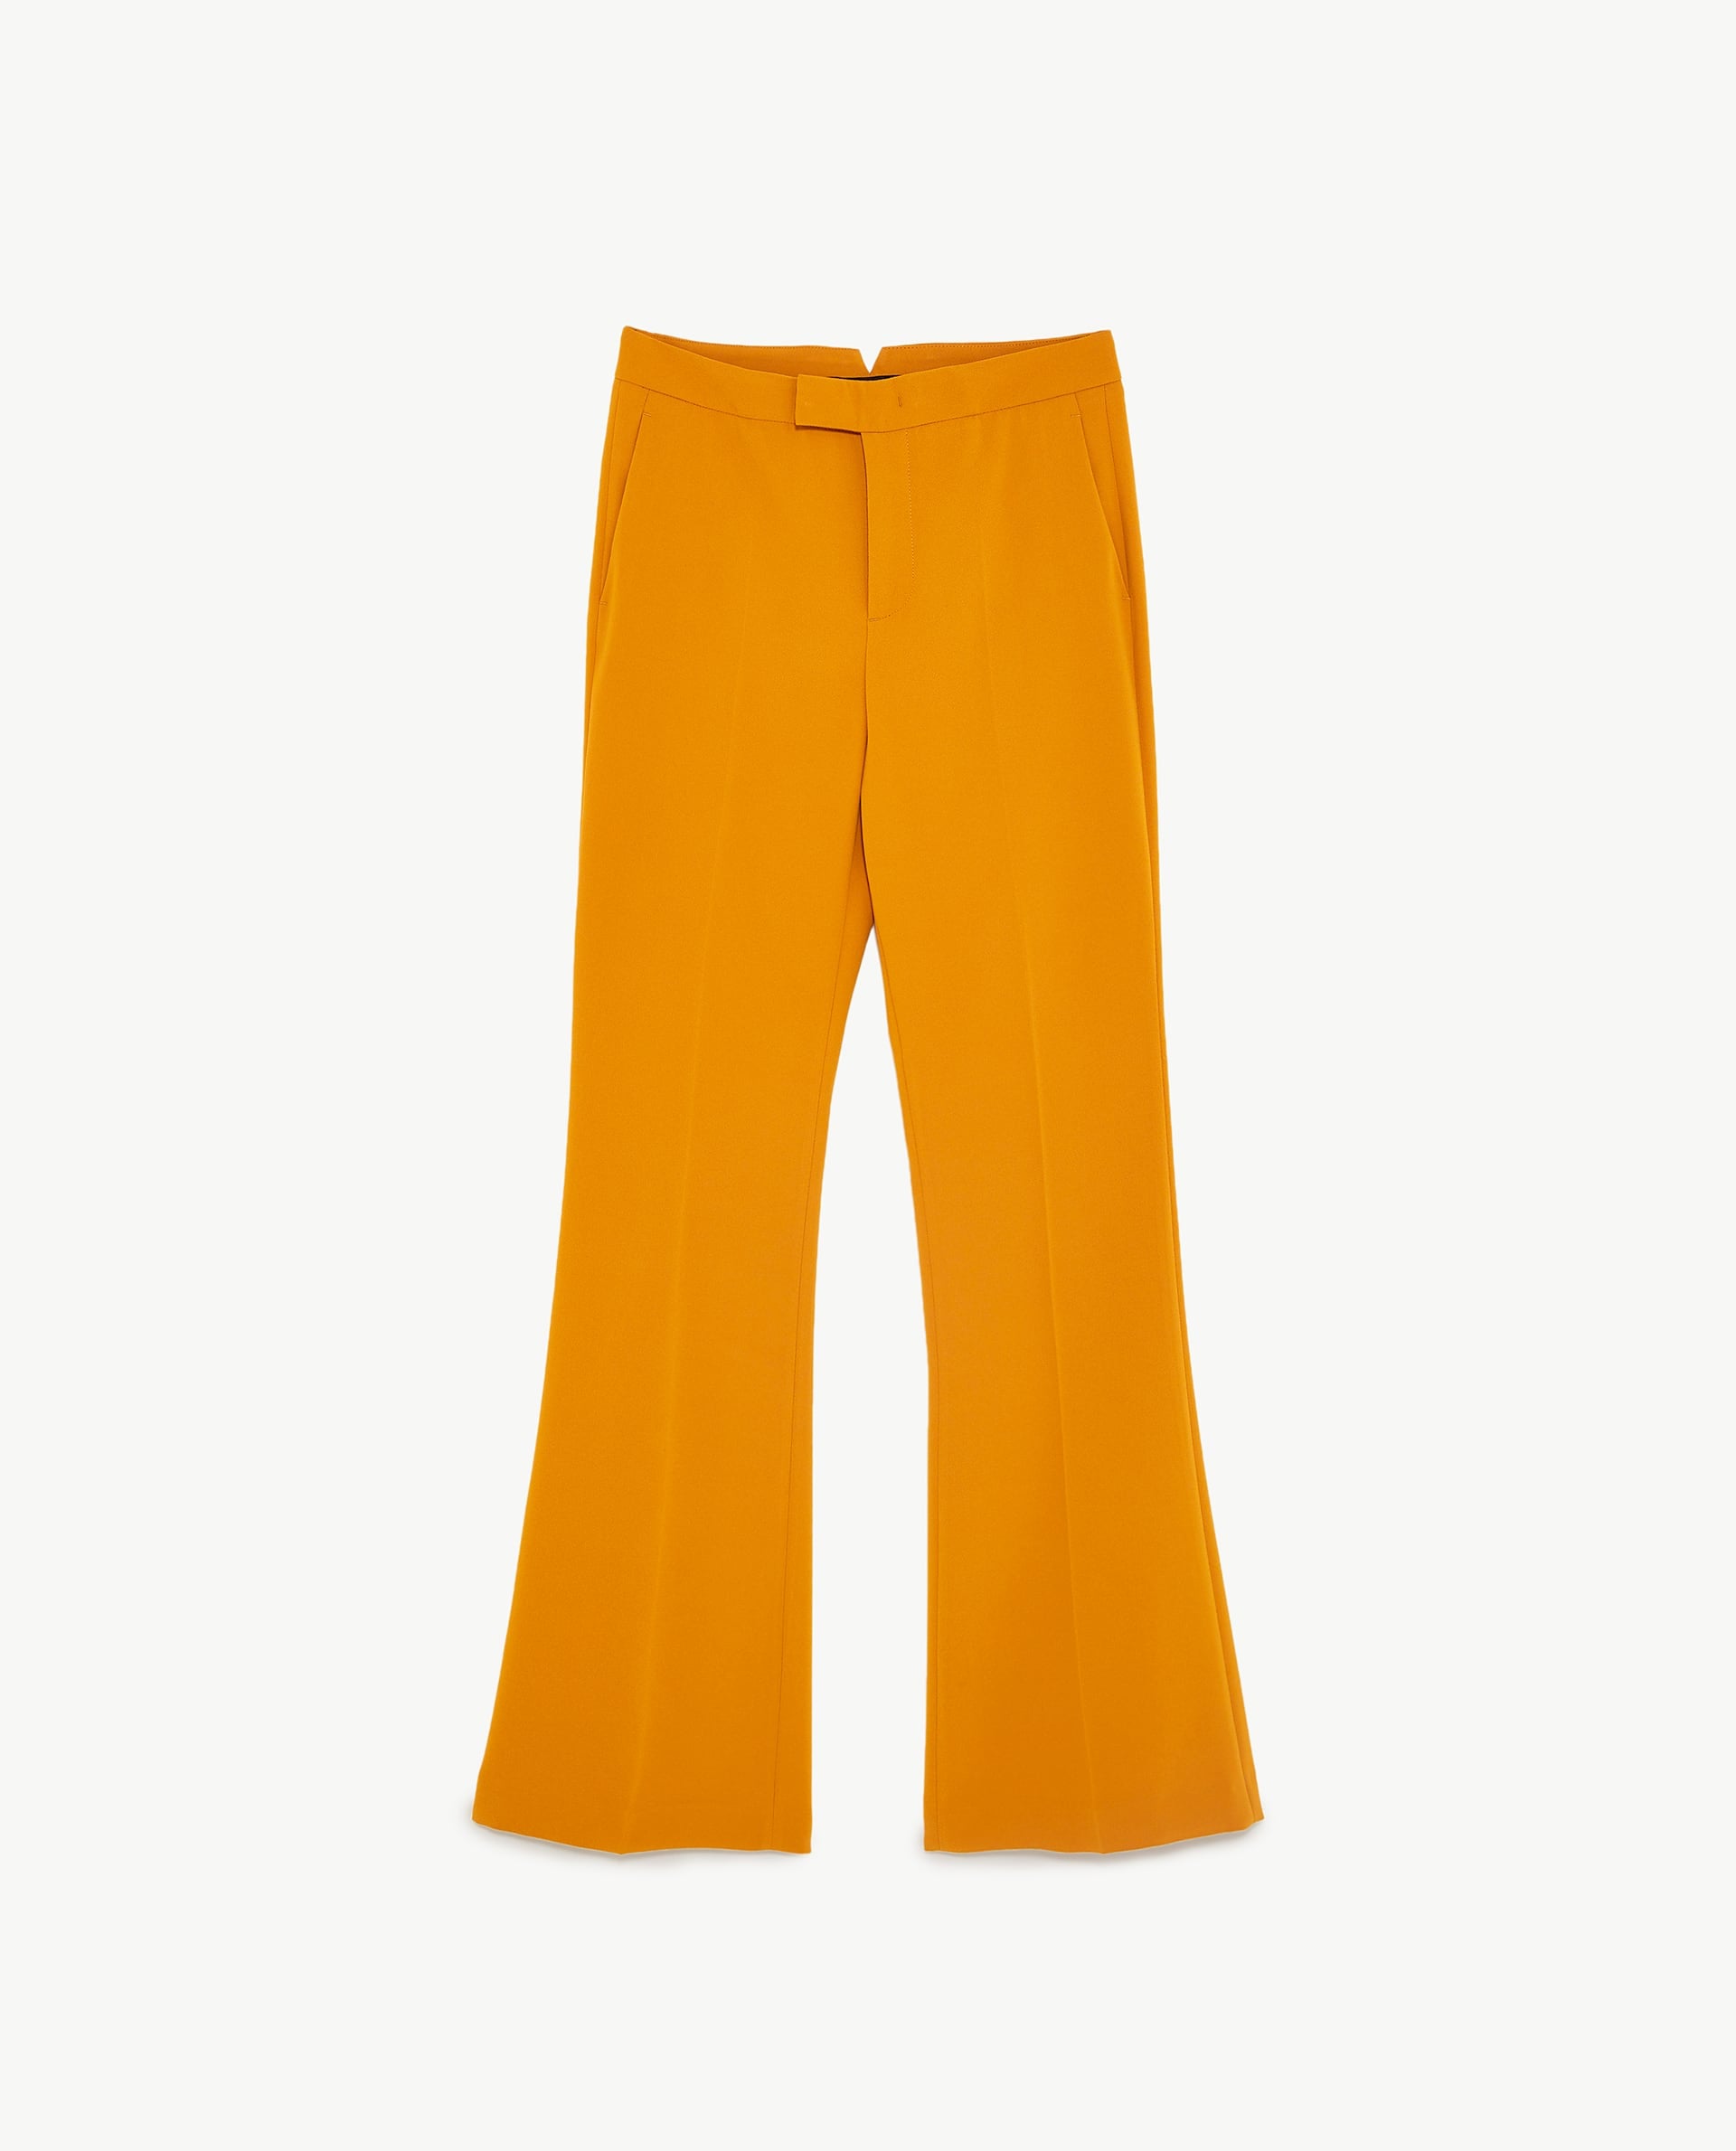 Zara Orange Pants for Women for sale  eBay